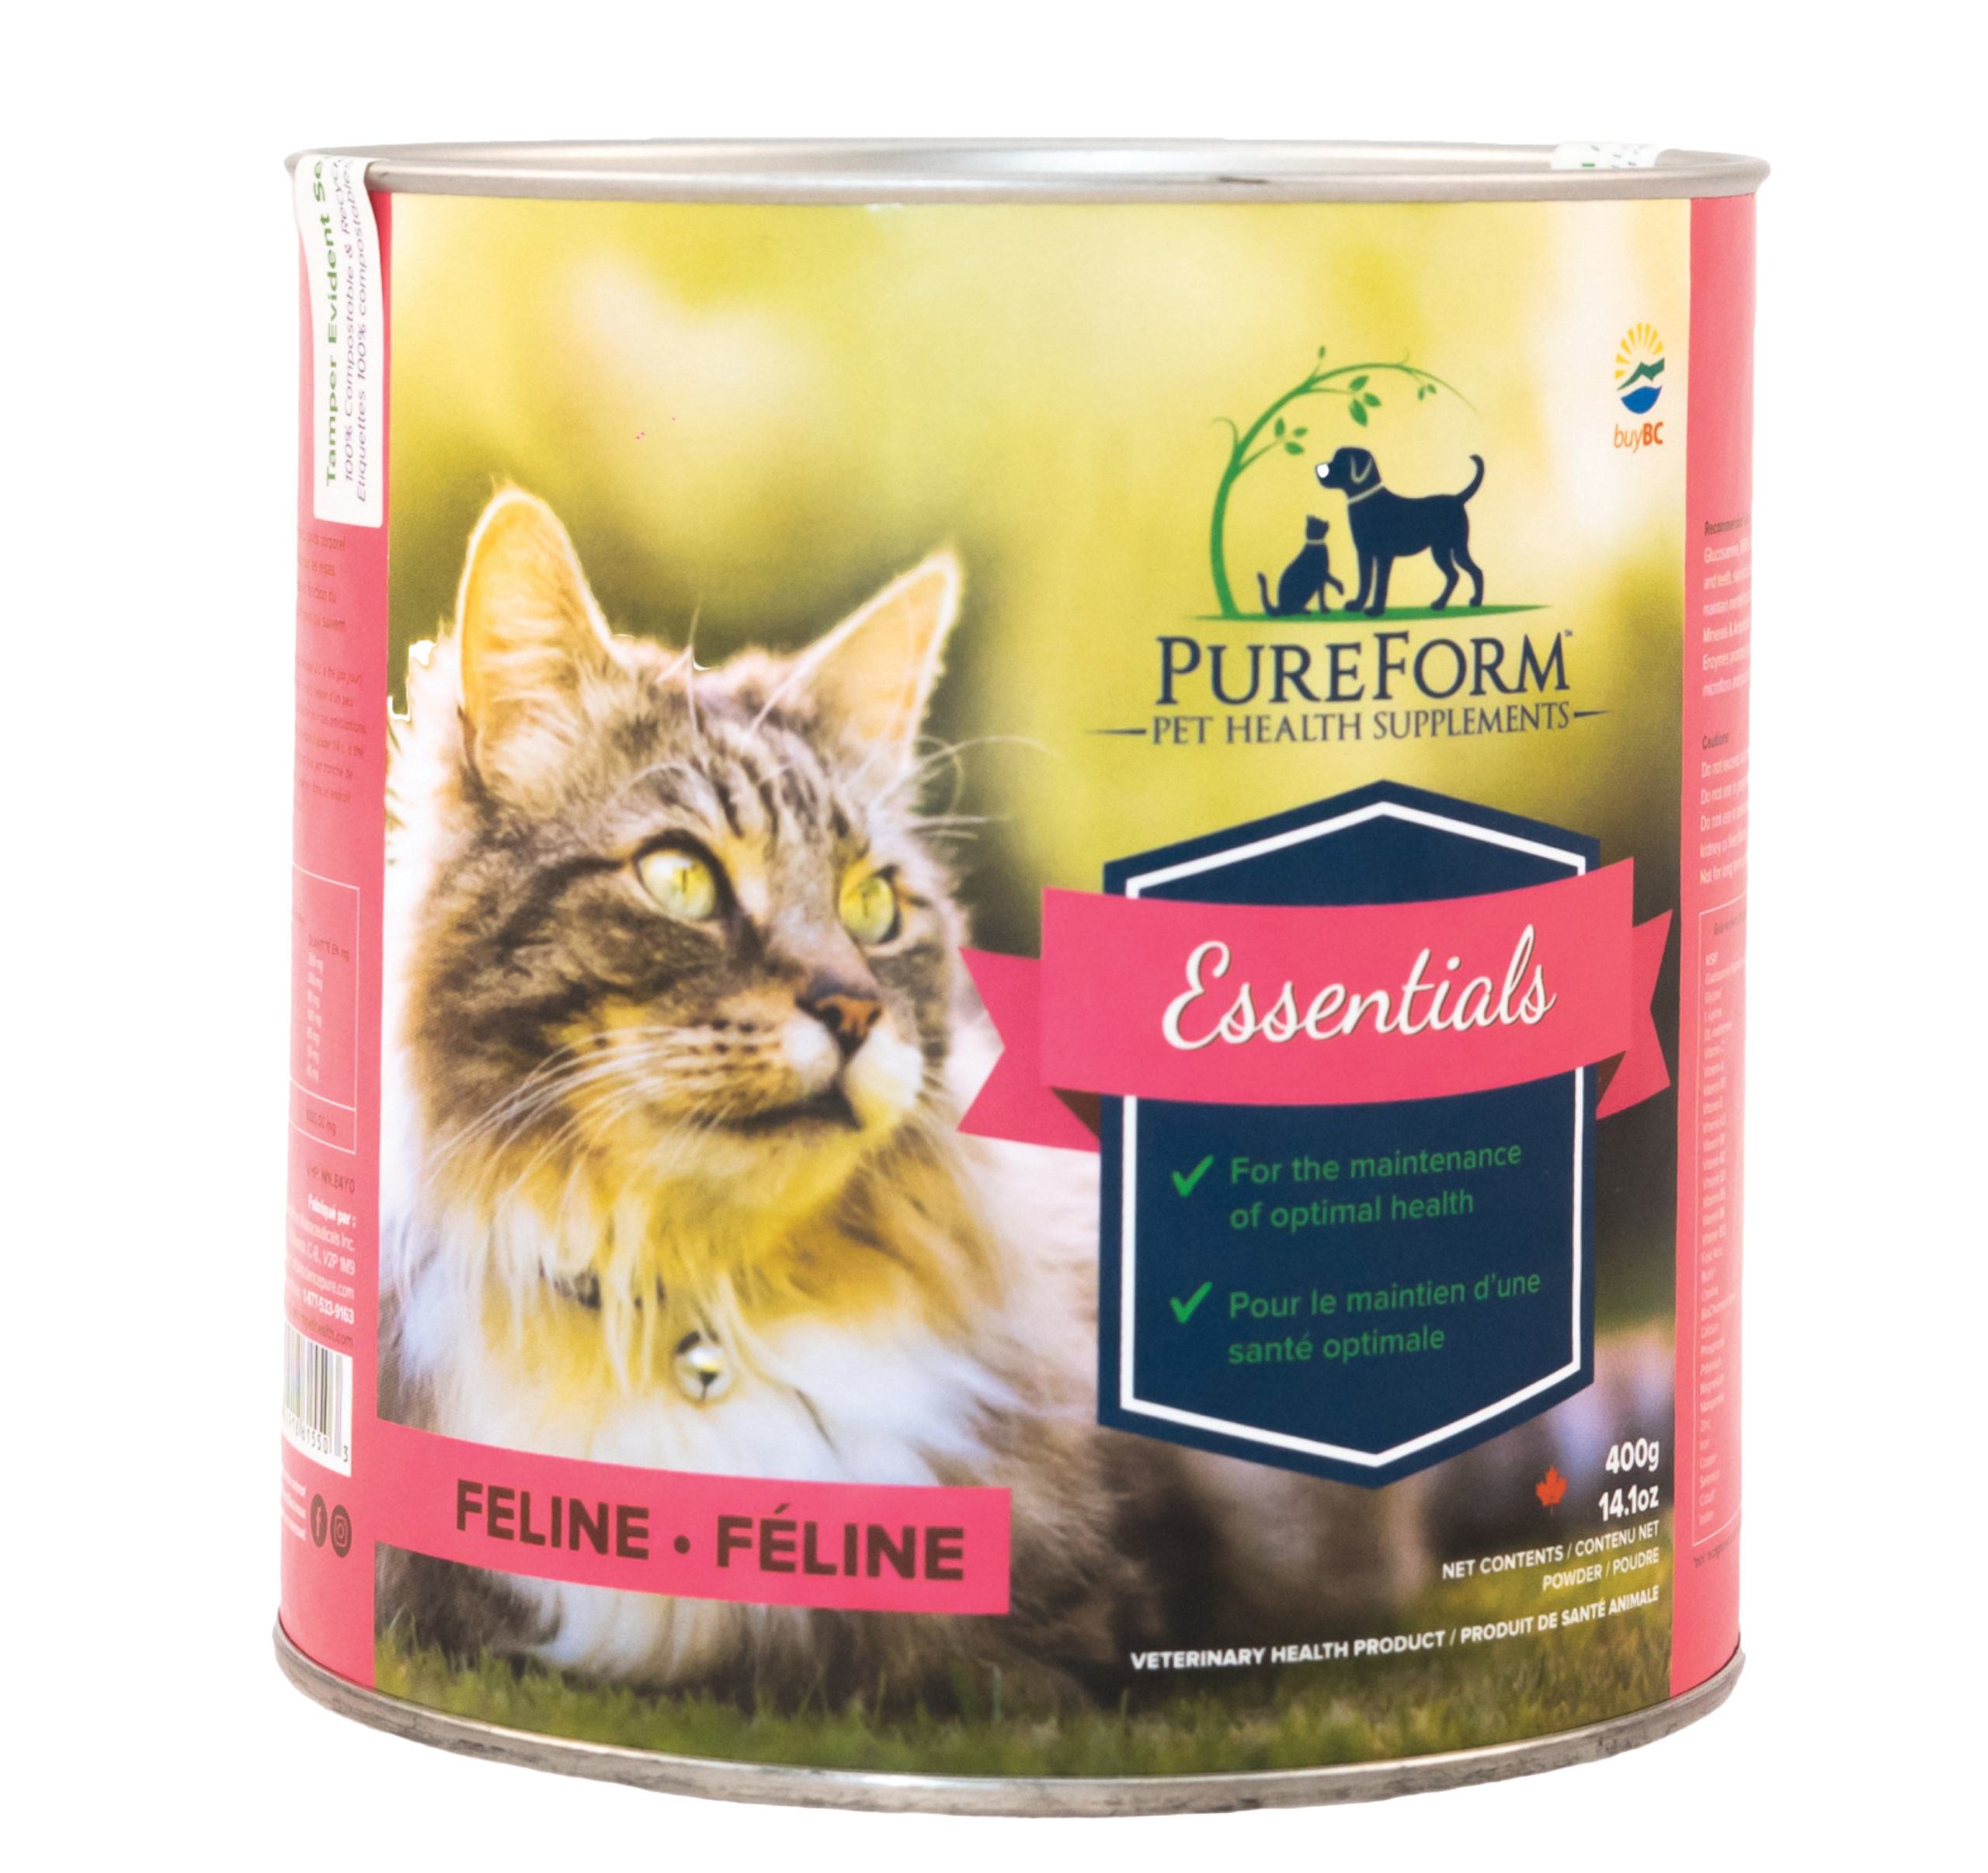 PureForm Pet Health’s Feline Essentials supplement